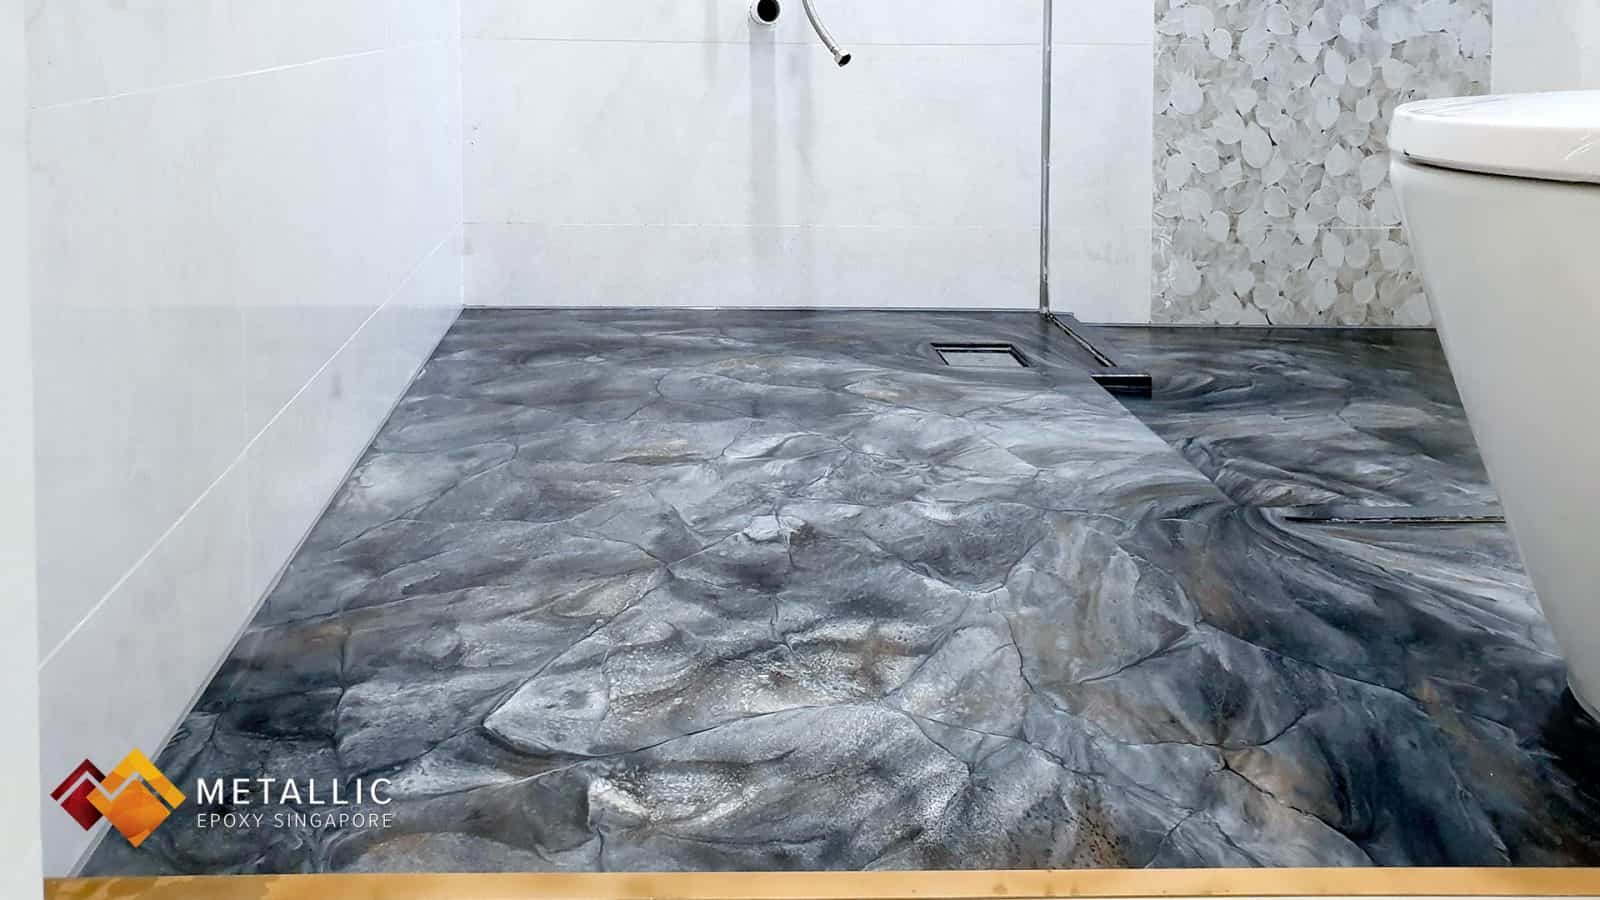 Metallic Stone Bathroom Flooring